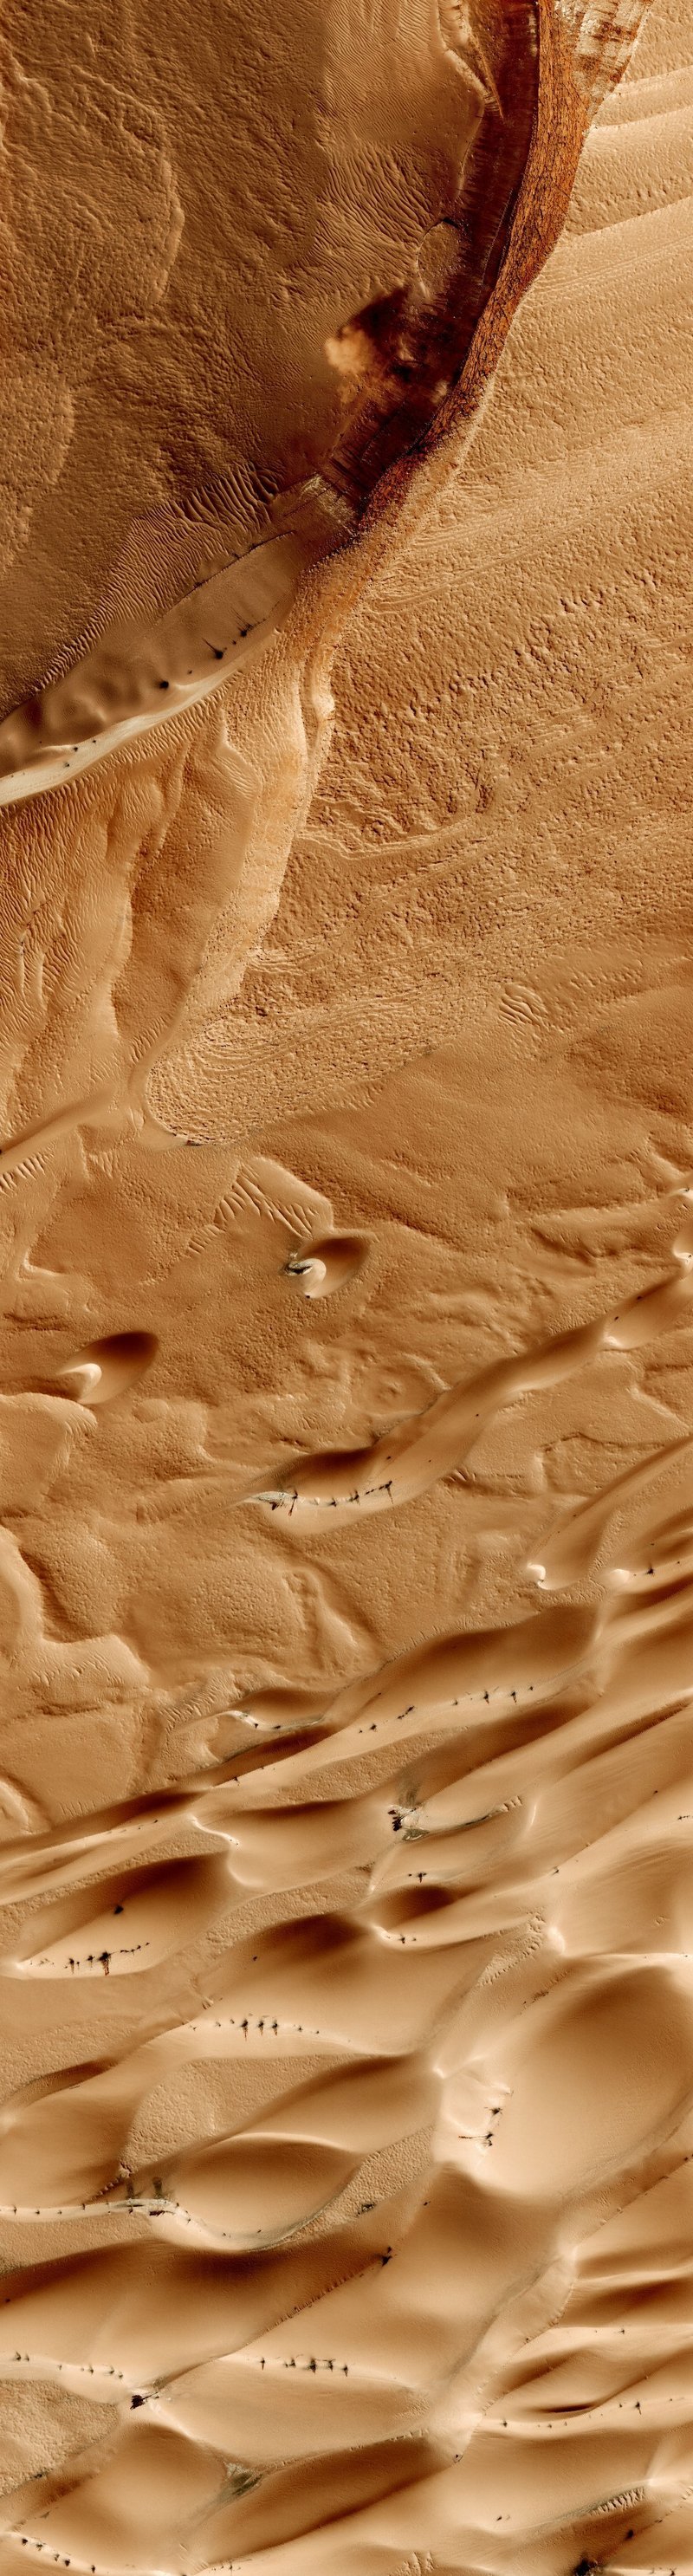 Superfície de marte vista de 320 km de altura. Michael Benson/NASA/JPL/University of Arizona/Kinetikon Pictures